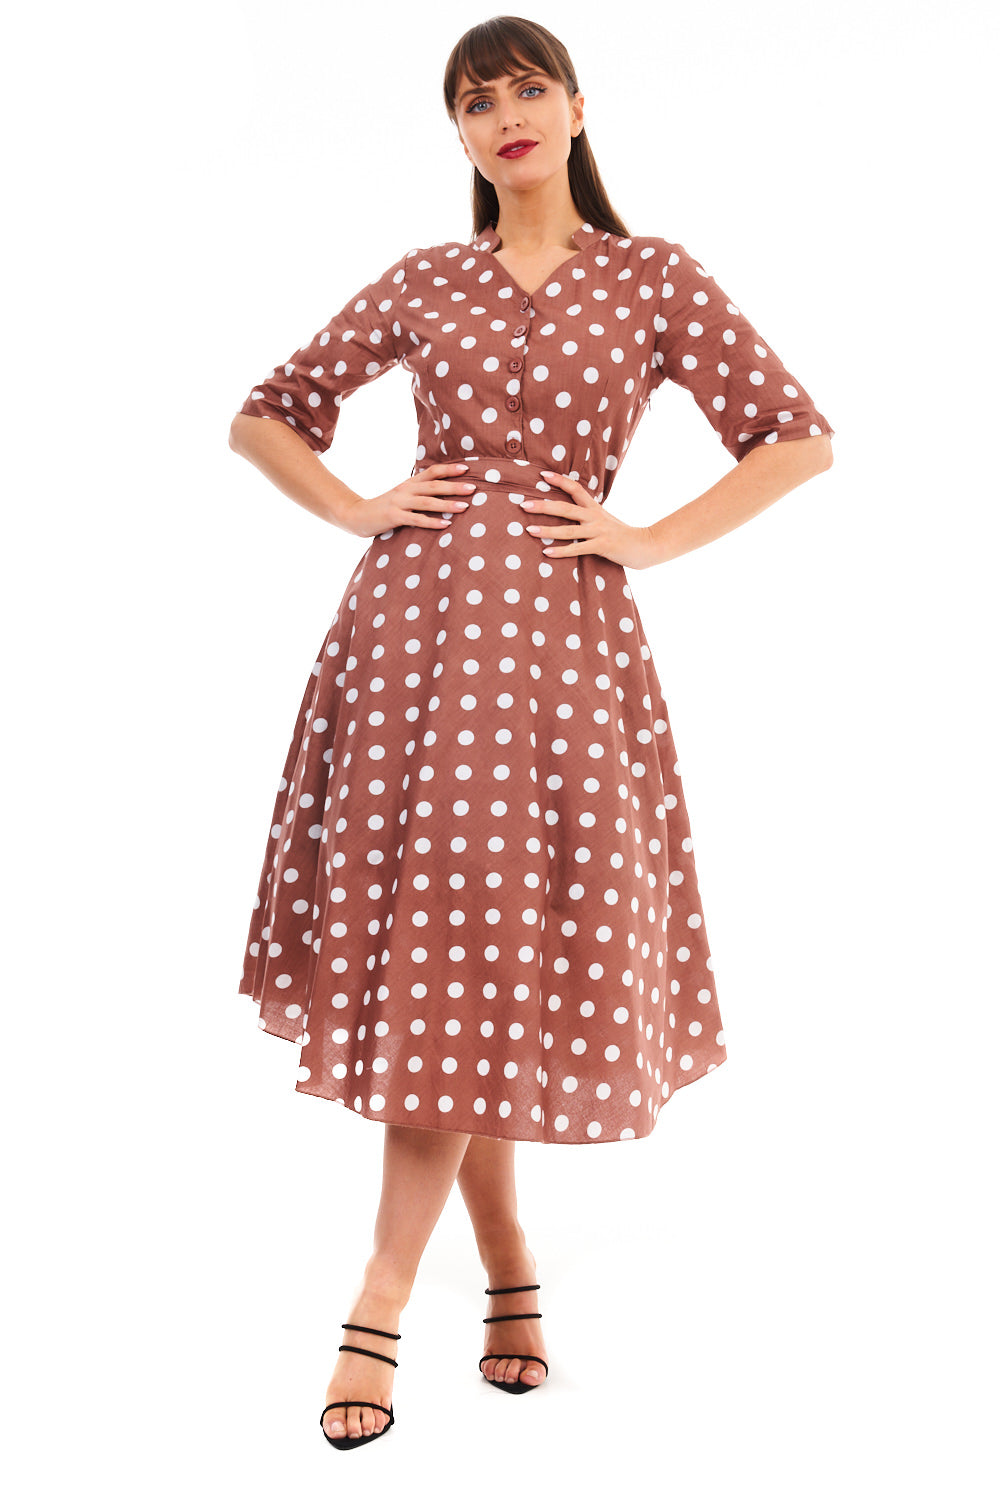 Retro Vintage 1940's Polka Dot Shirt Dress in Beige